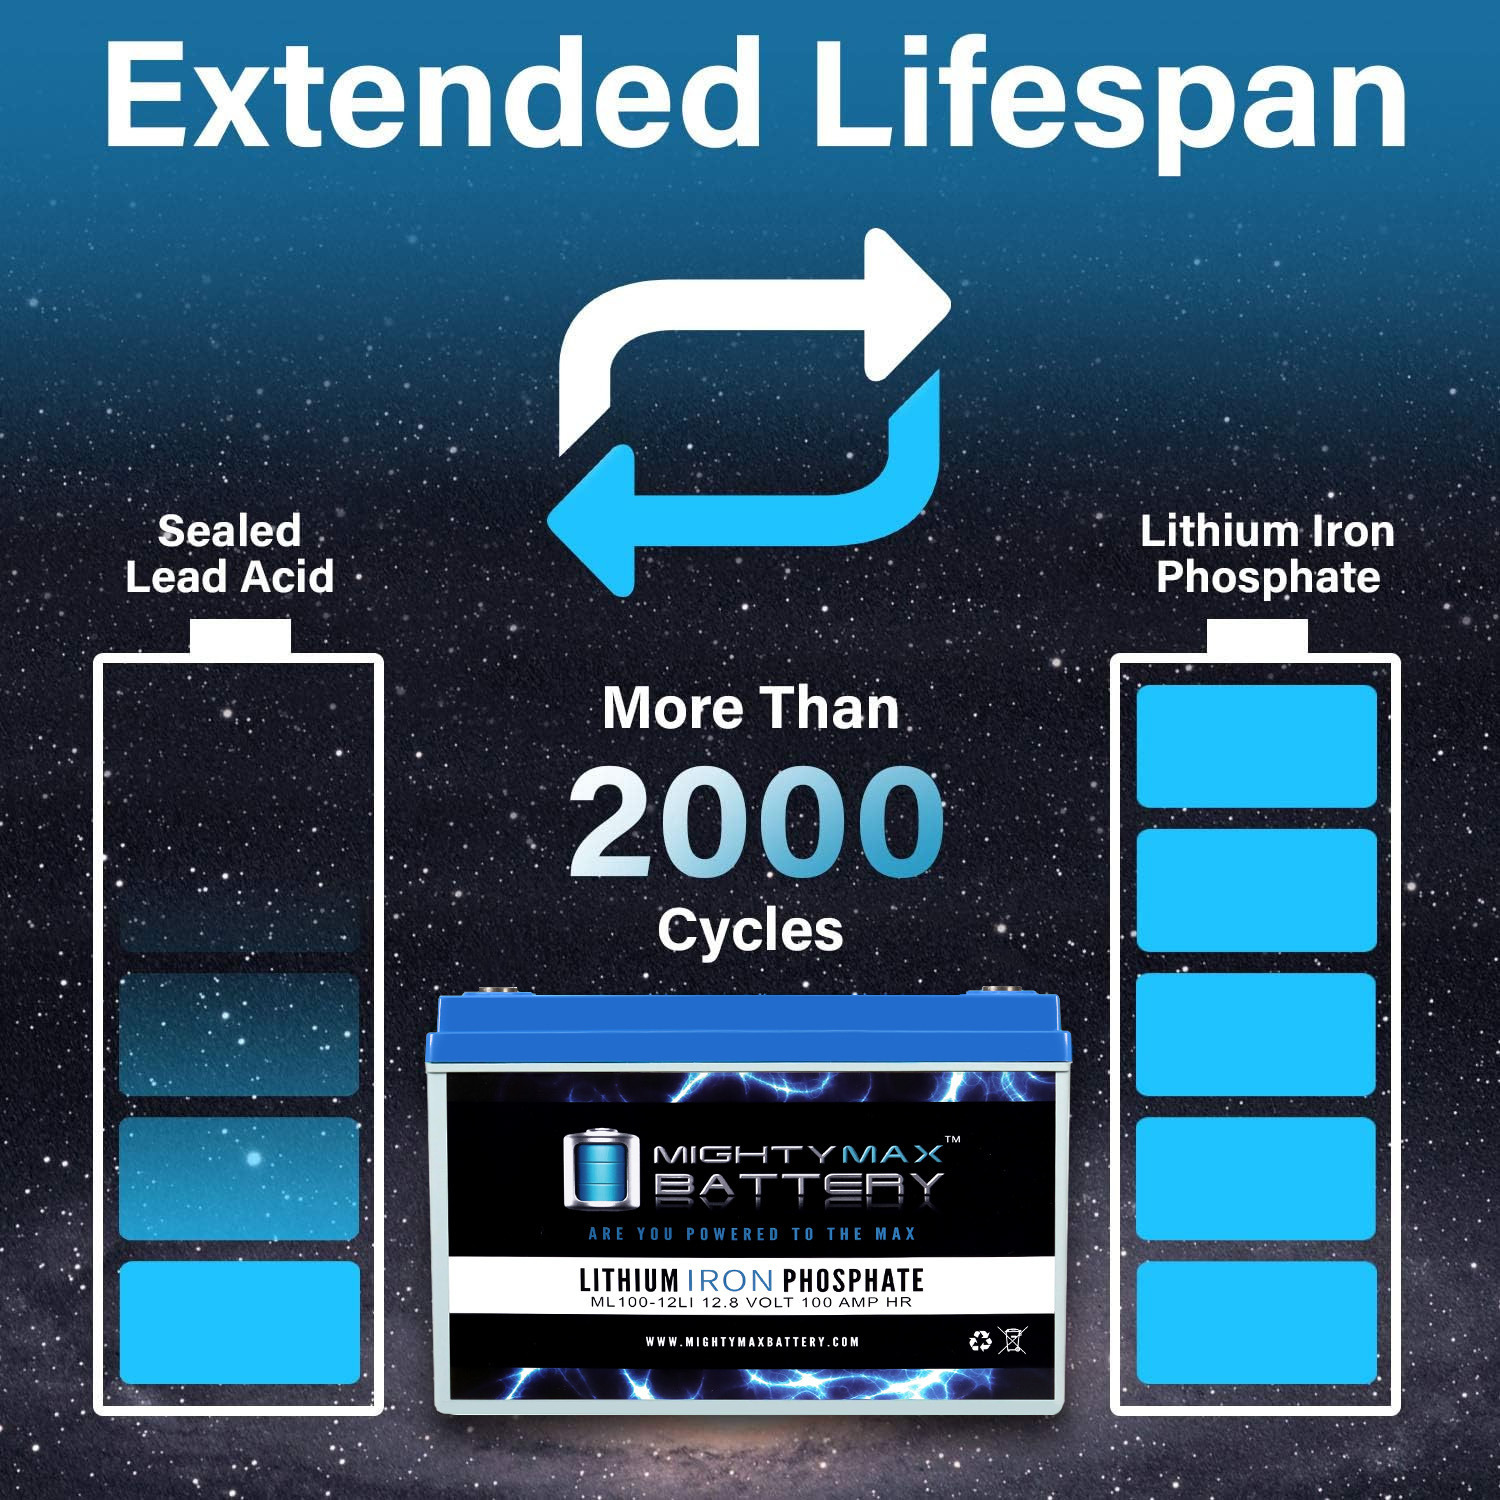 100AH 12V LiFePO4 HEATED Lithium Deep Cycle Battery - Guardian